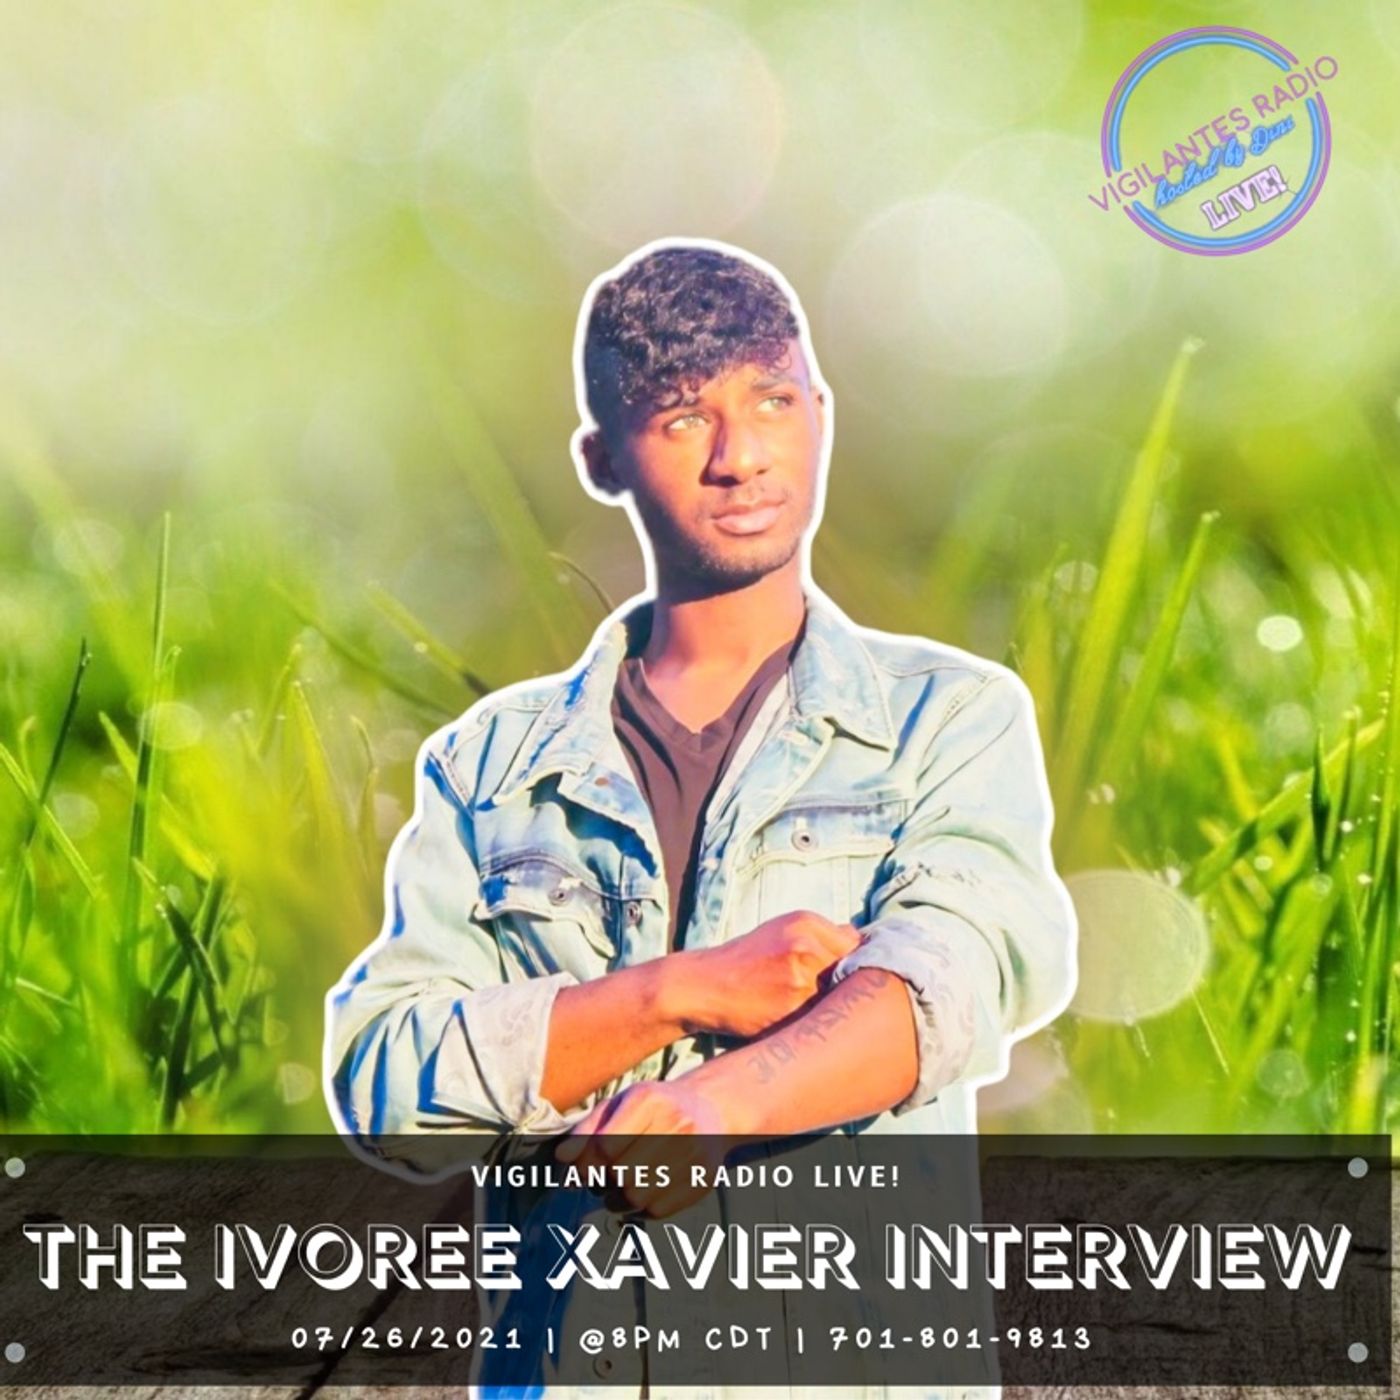 The Ivoree Xavier Interview. Image